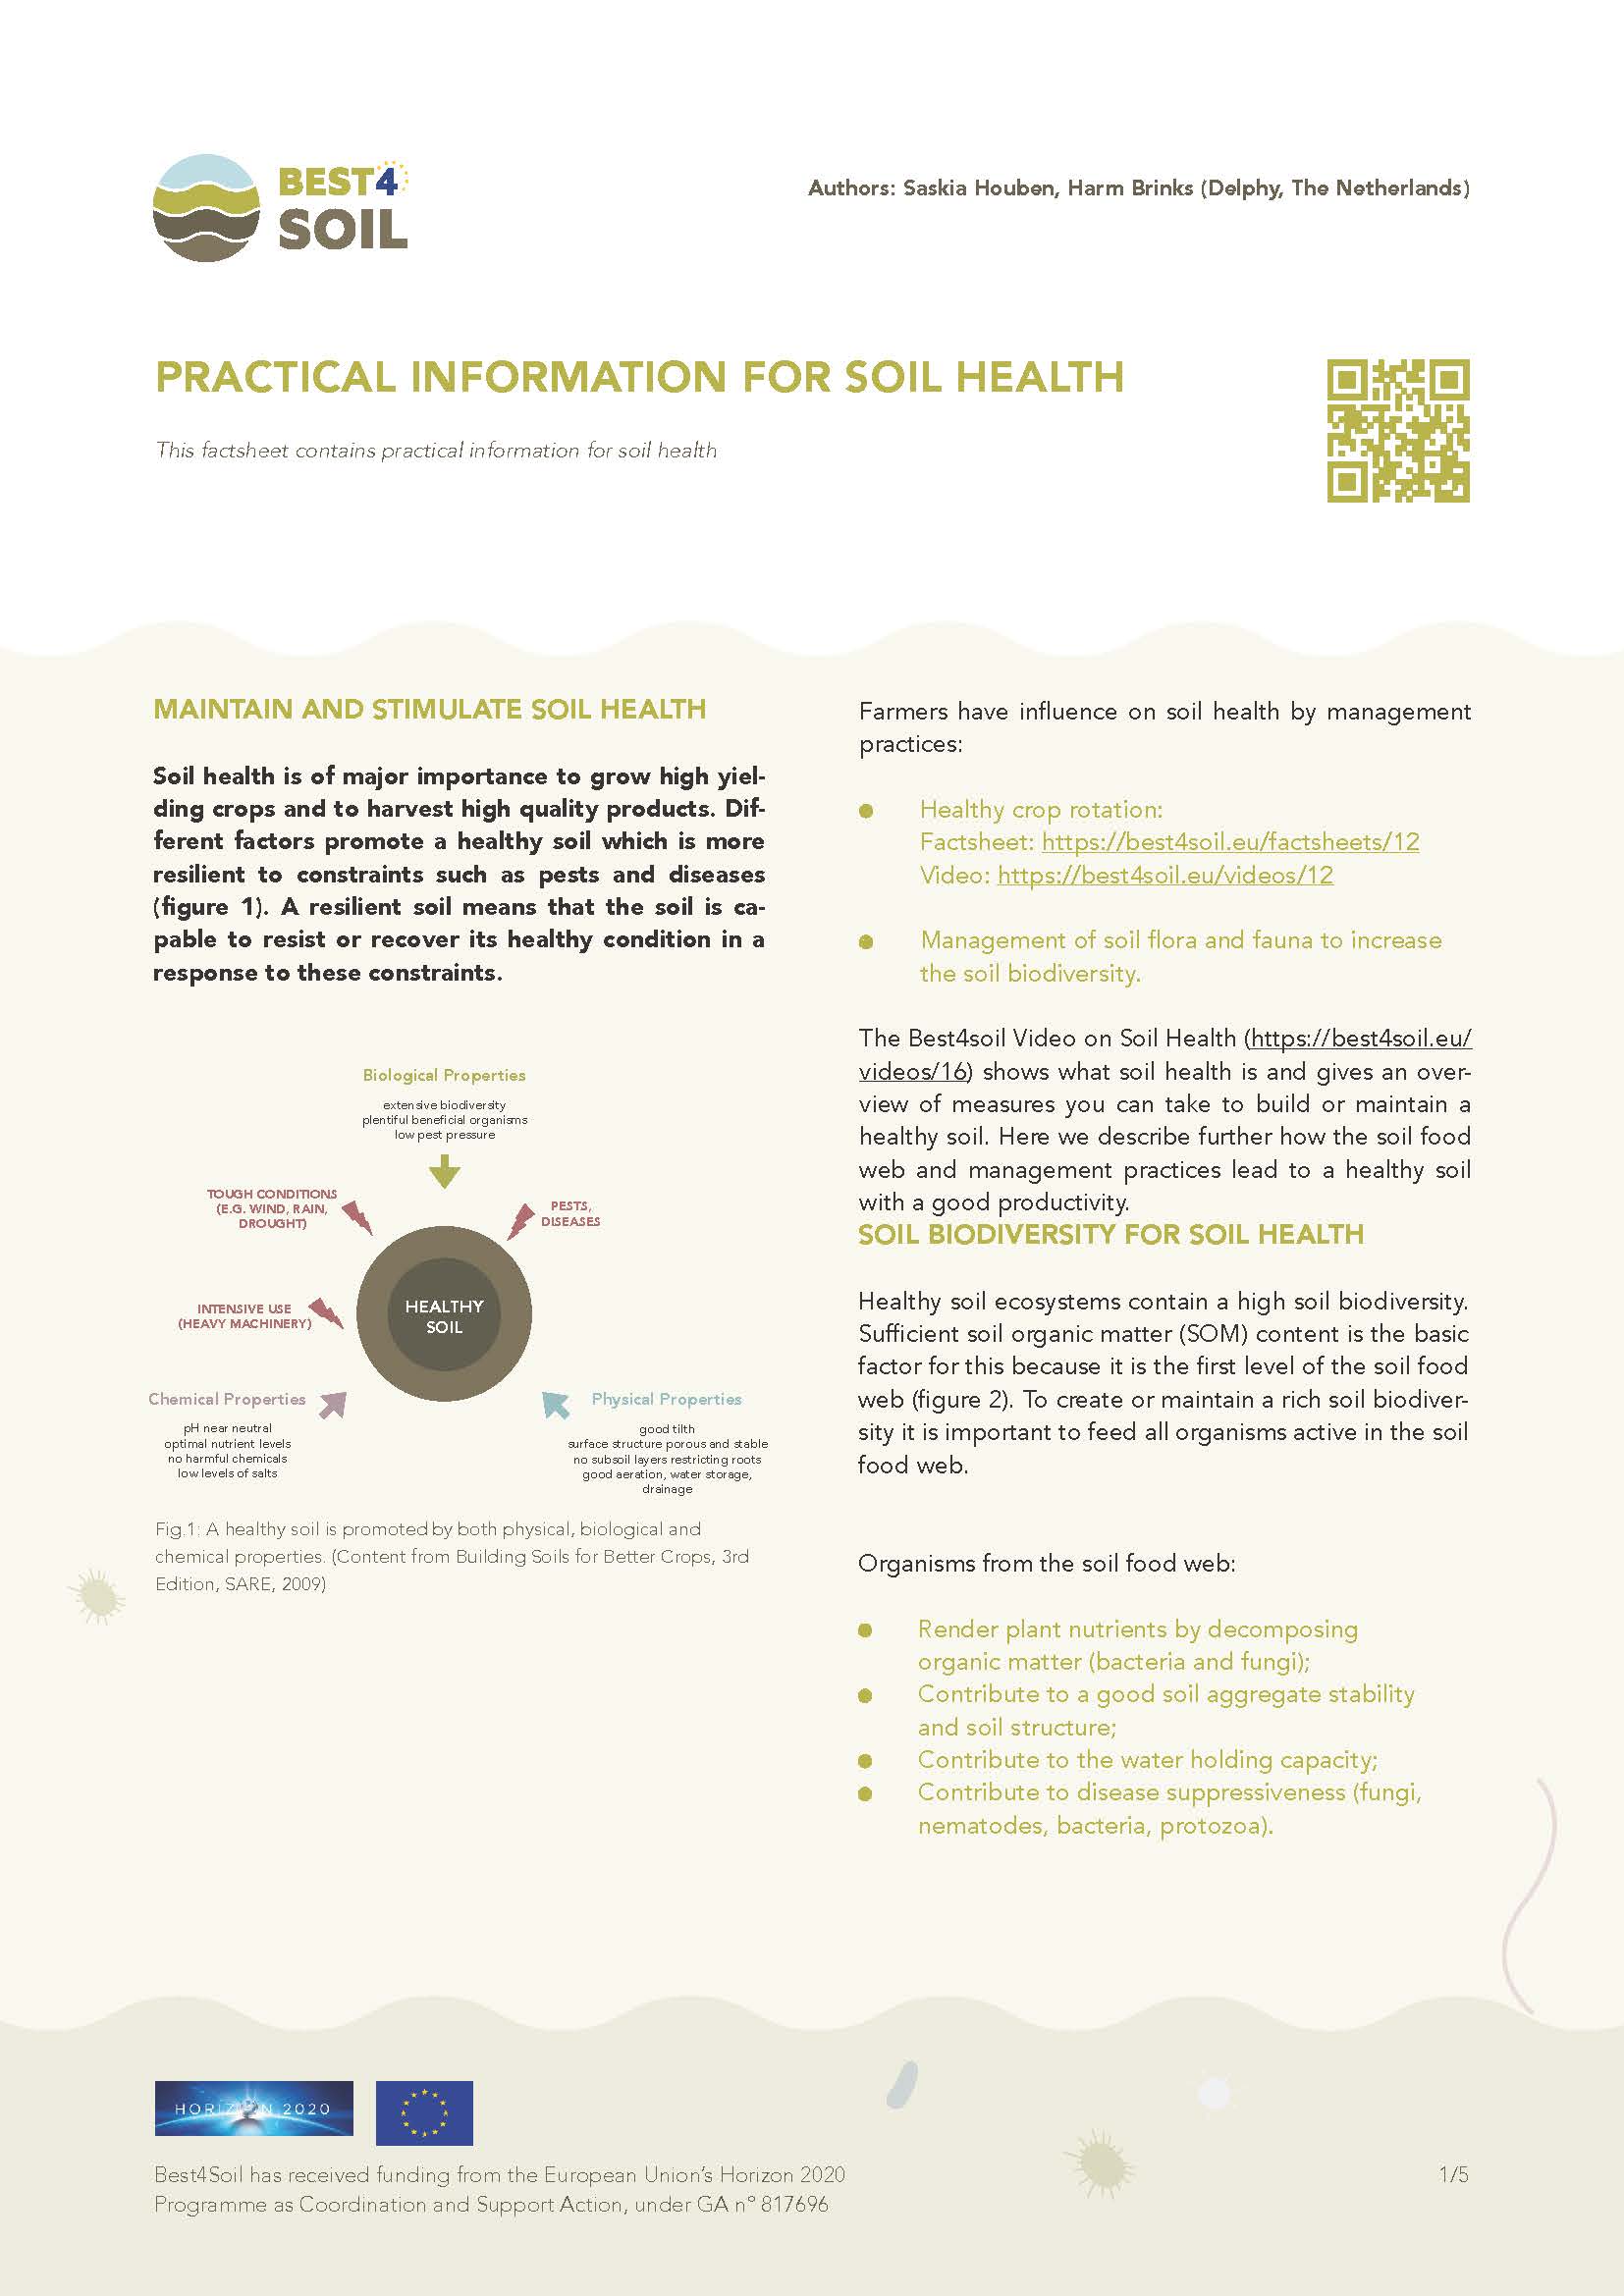 Practical information for soil health (Best4Soil Factsheet)